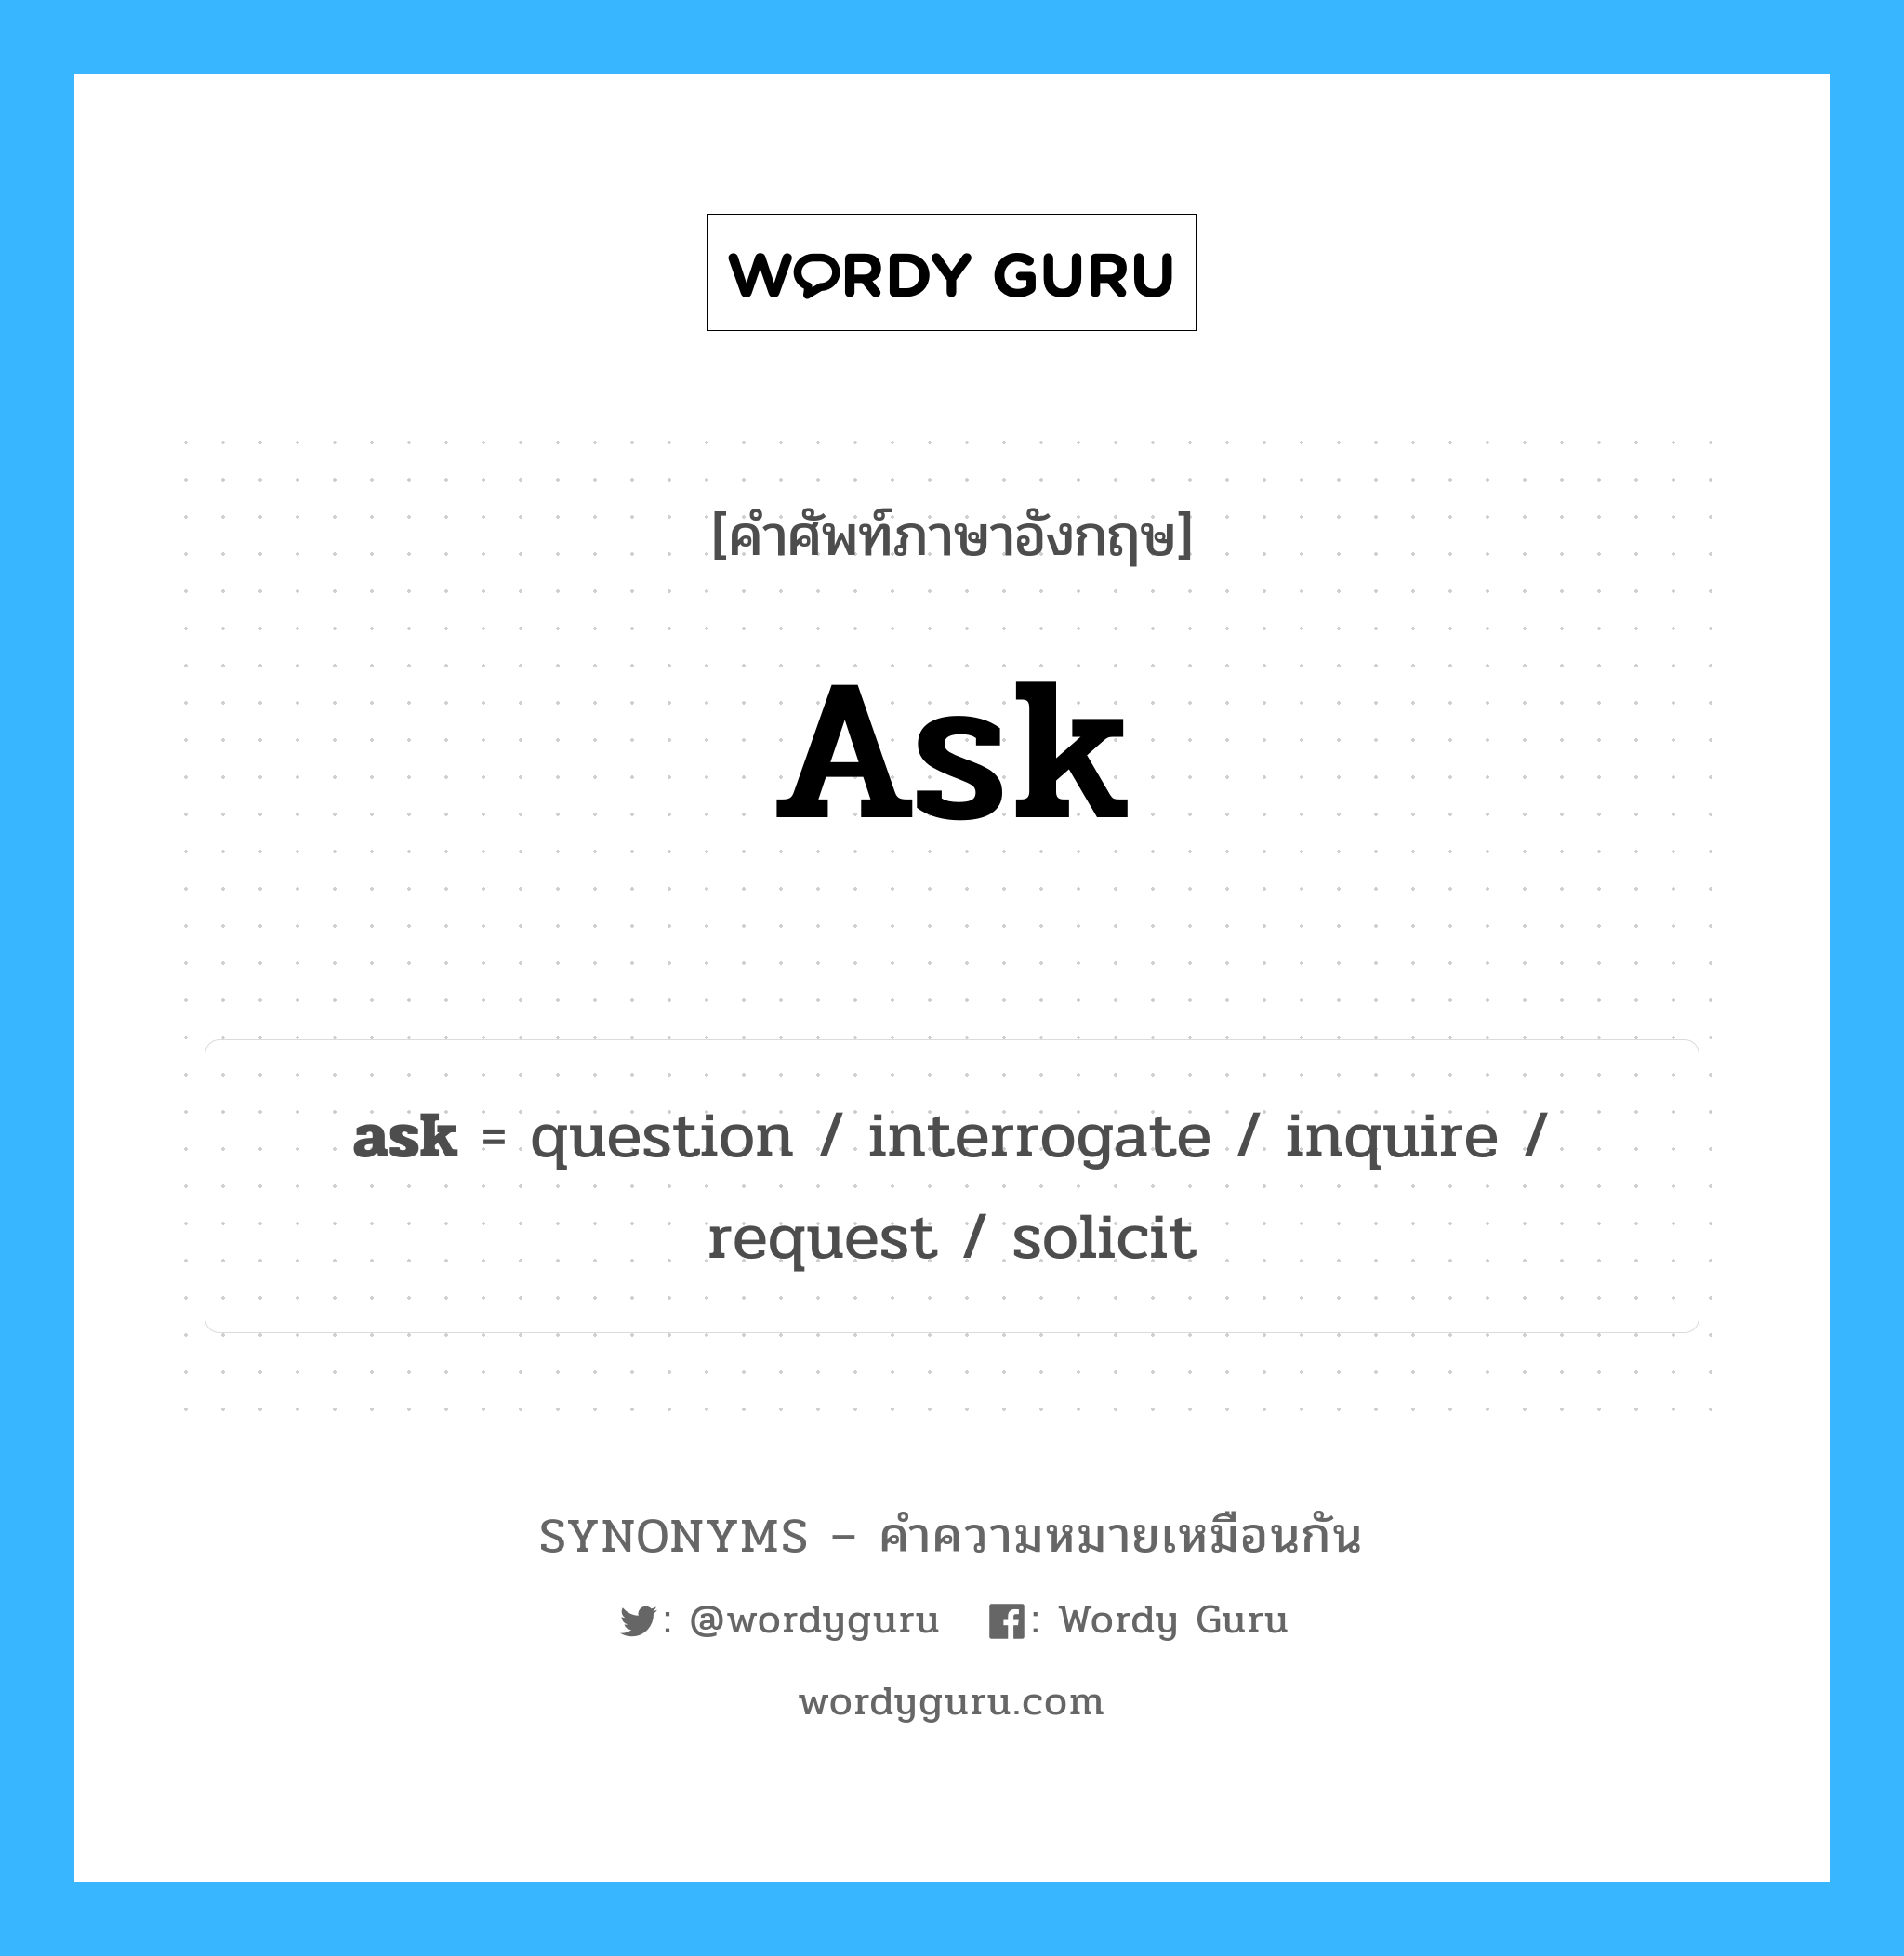 request เป็นหนึ่งใน ask และมีคำอื่น ๆ อีกดังนี้, คำศัพท์ภาษาอังกฤษ request ความหมายคล้ายกันกับ ask แปลว่า ร้องขอ หมวด ask